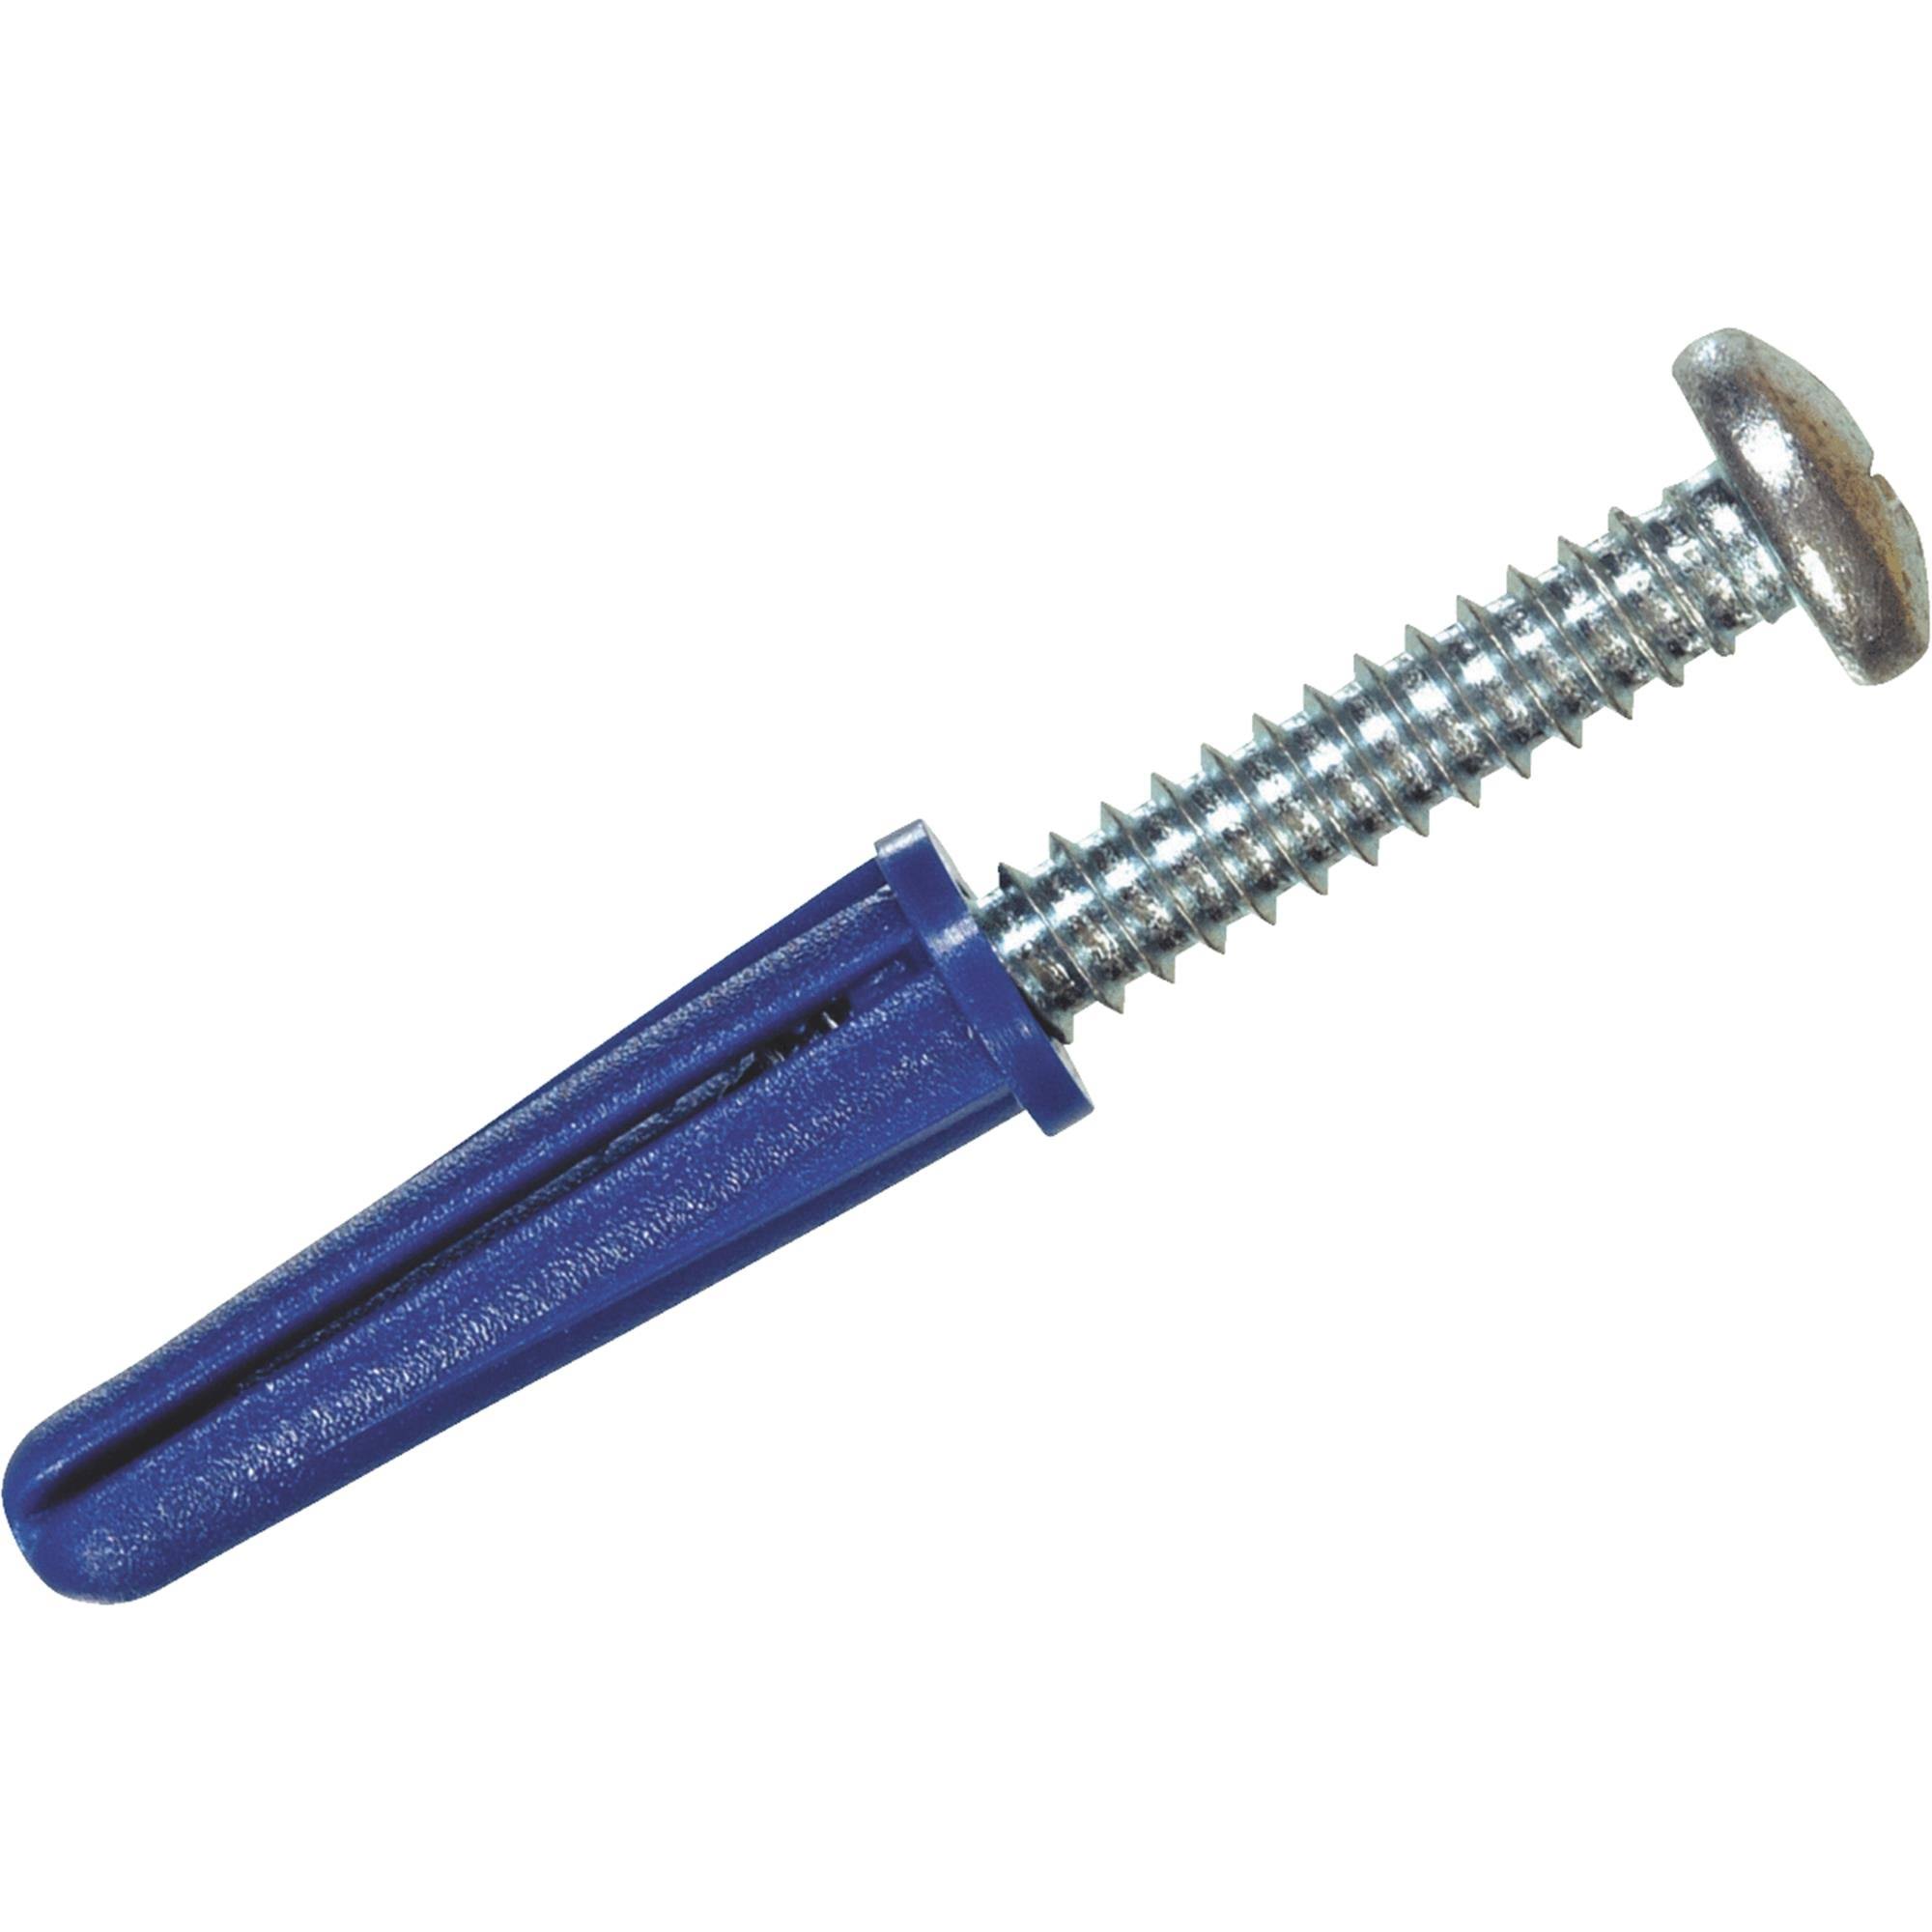 Hillman Plastic Anchor & Screw - Blue, Size 6-8